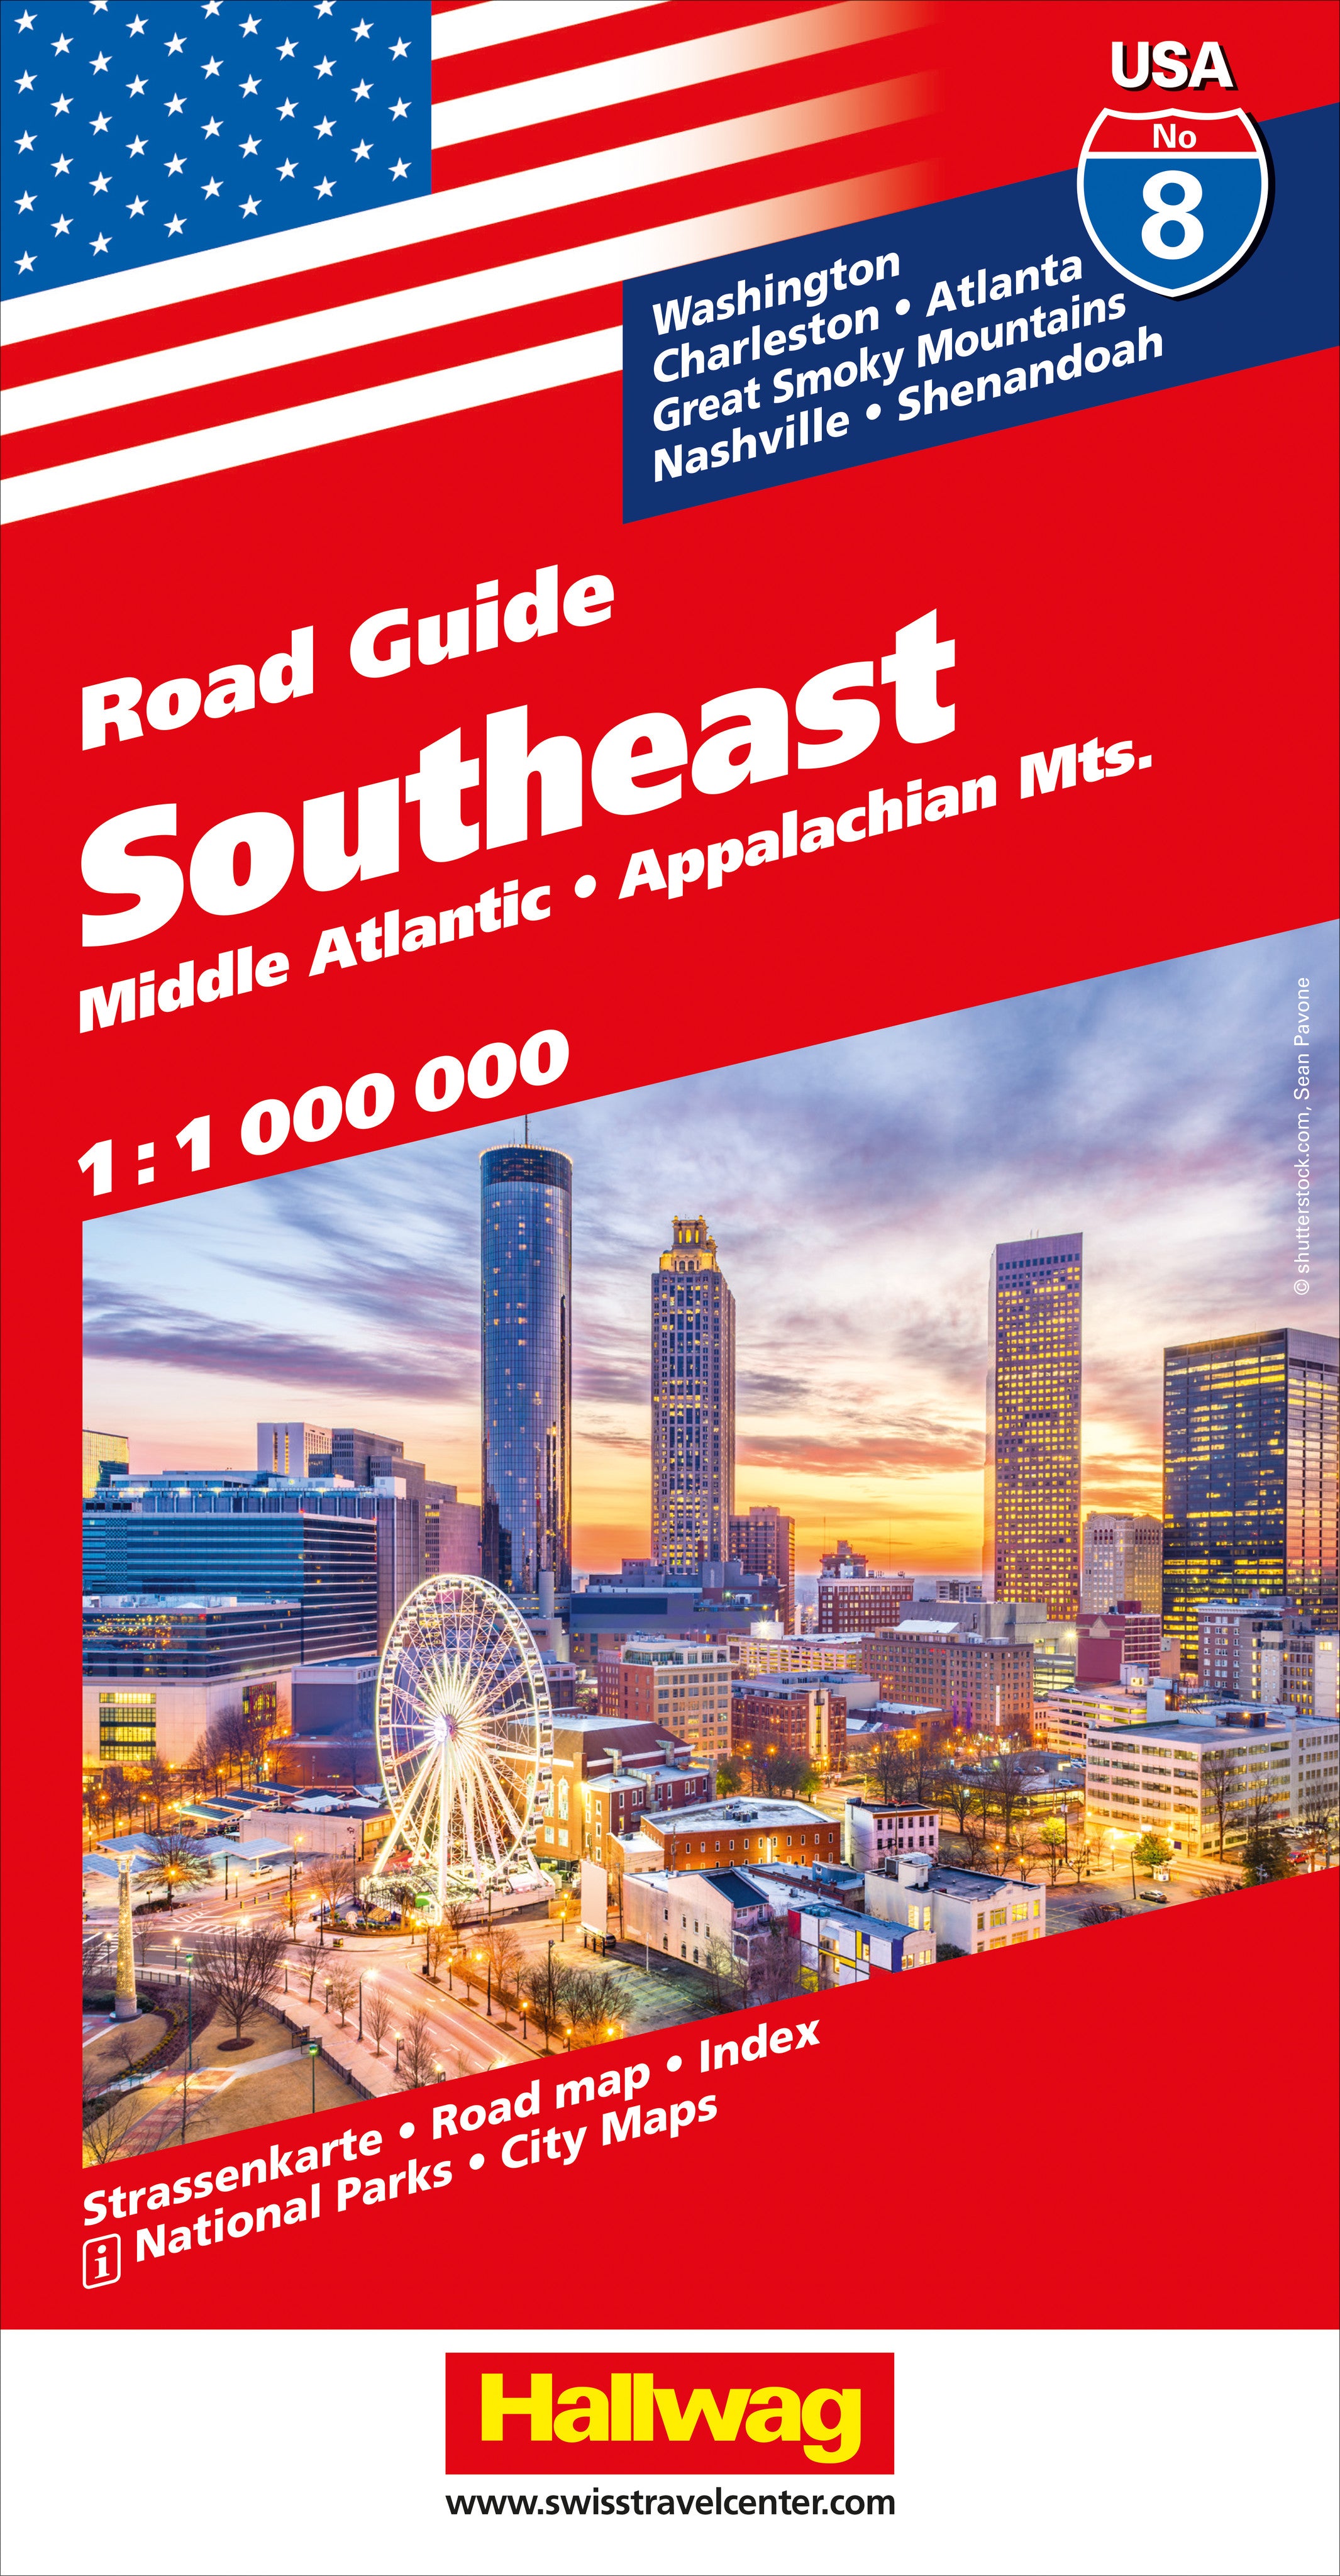 Southeast Middle Atlantic, Appalachian Mts. - 08 USA Road Guide 1:1.000.000 - Hallwag